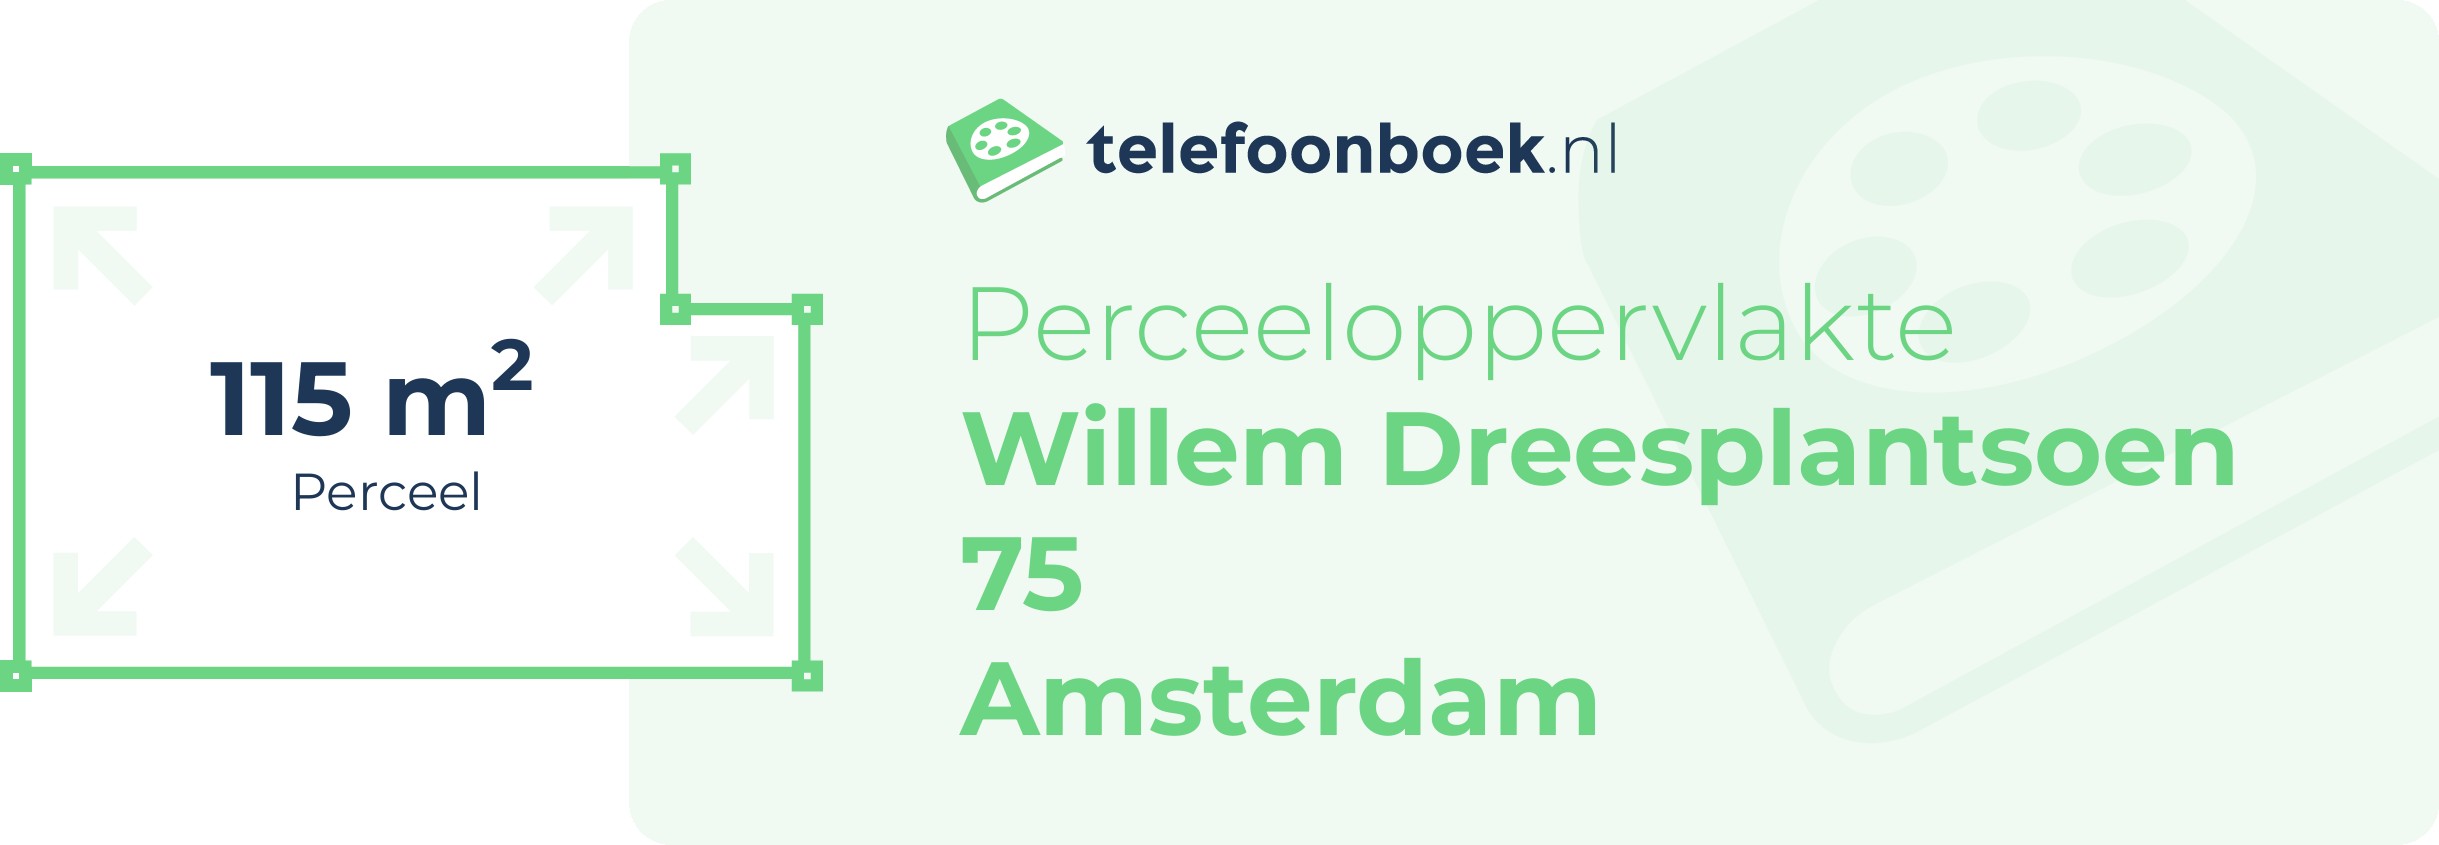 Perceeloppervlakte Willem Dreesplantsoen 75 Amsterdam